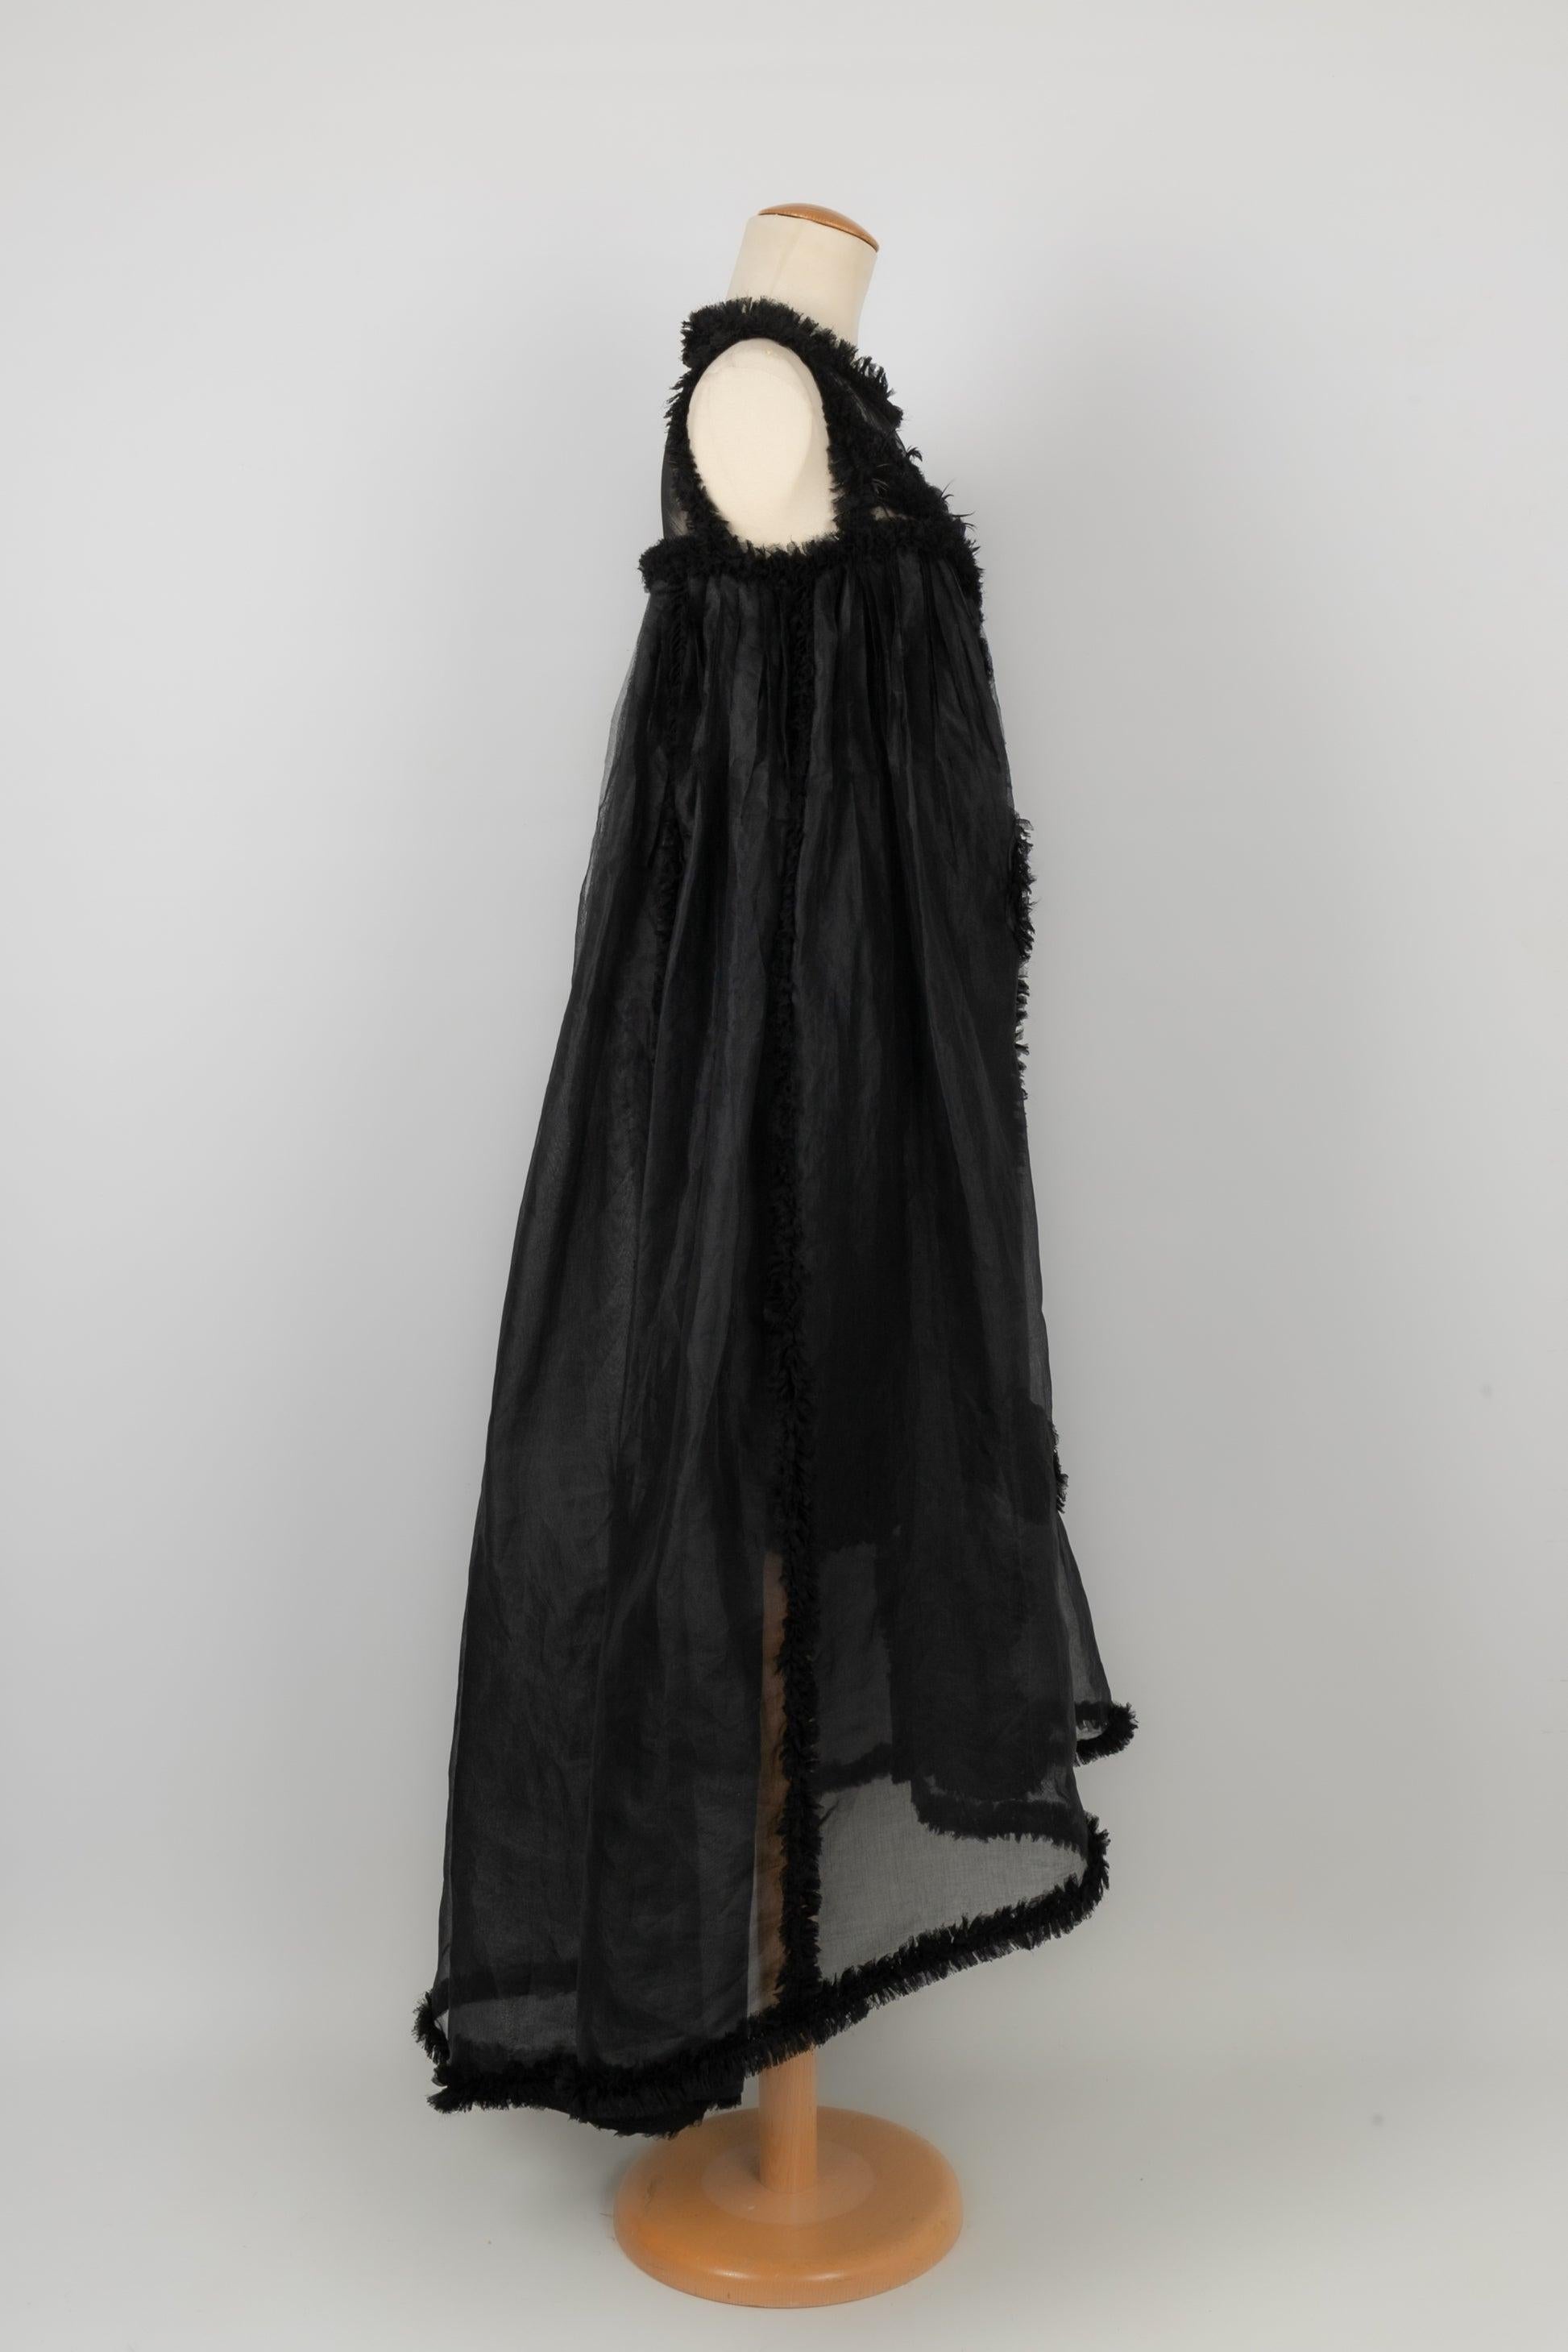 Women's Chanel Silk Taffeta Black Dress, Spring 2011